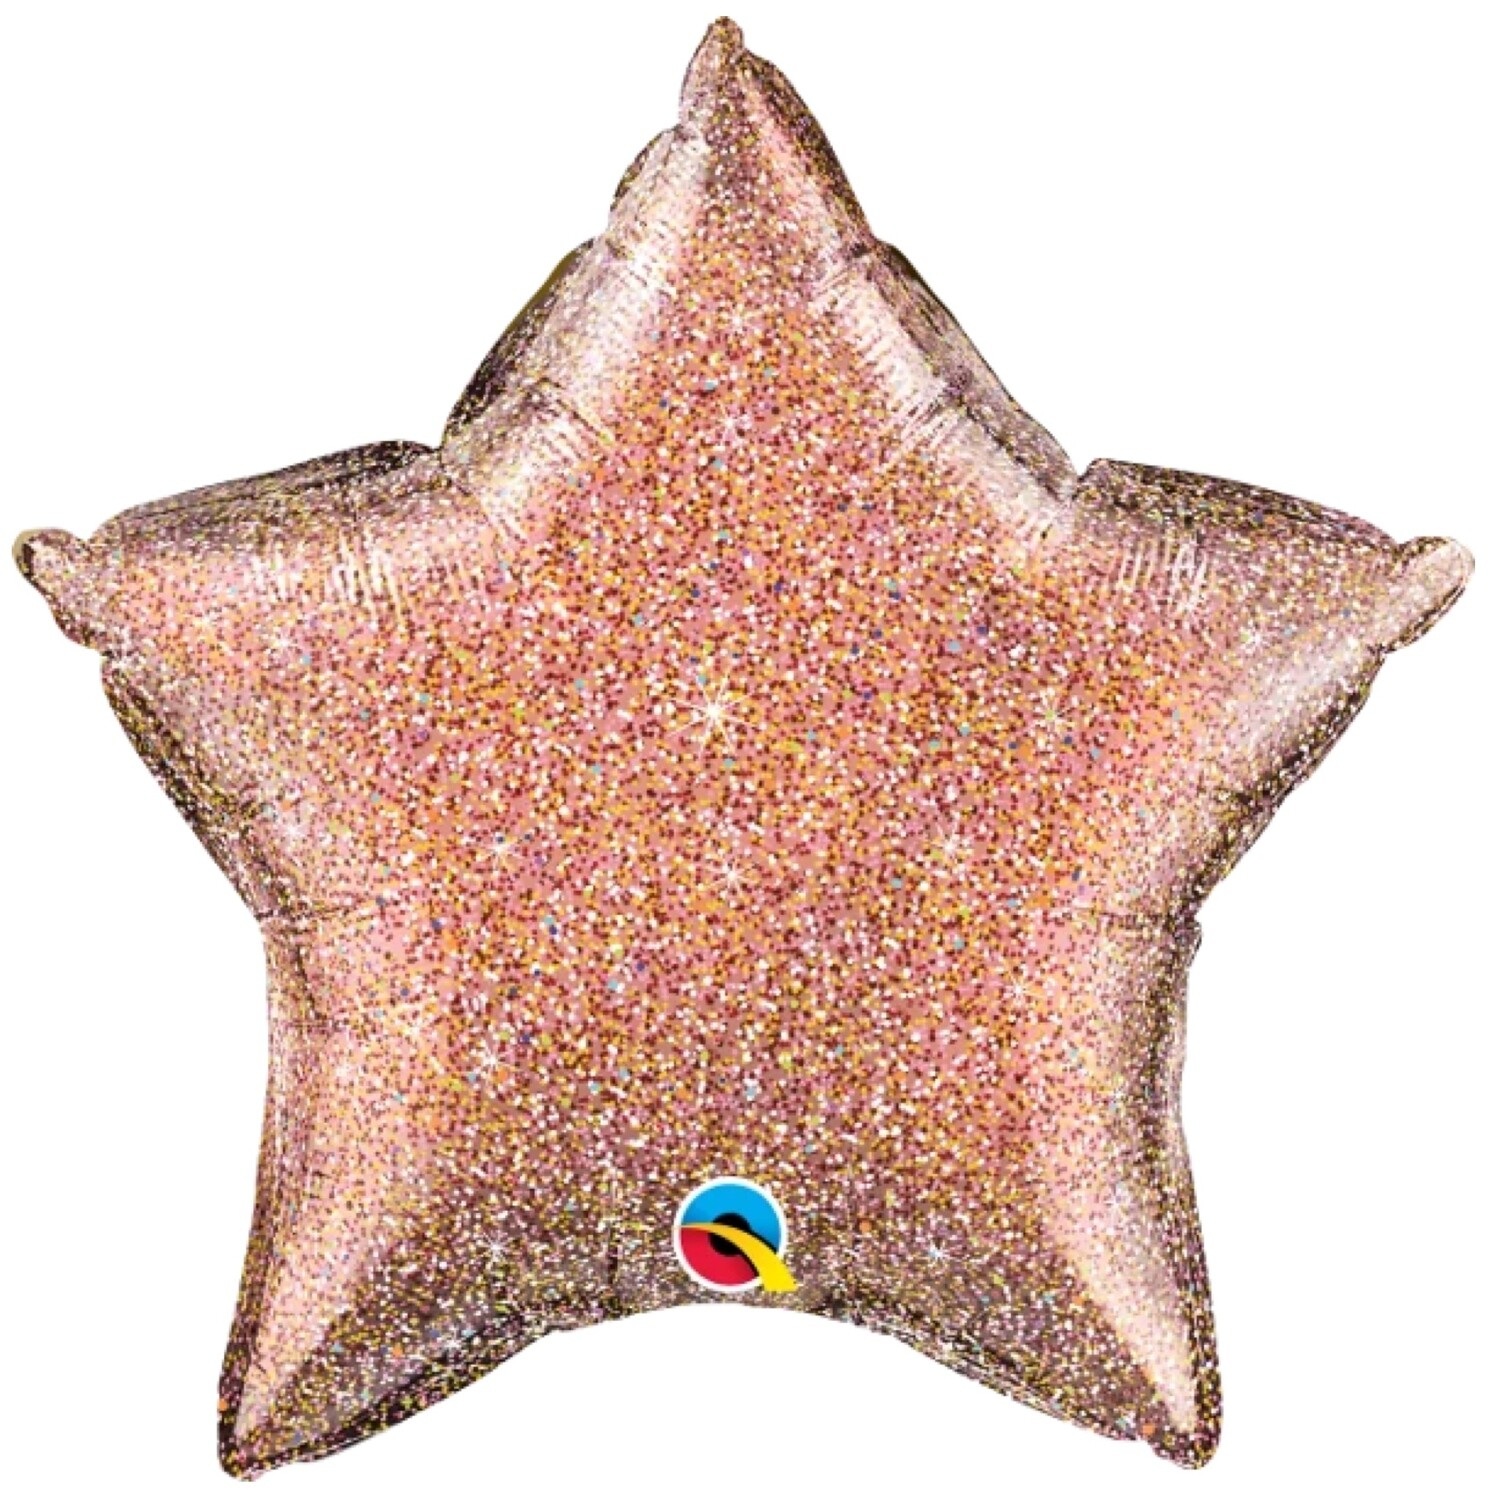 20' Rosegold Glittergraphic Star Balloon 2289718